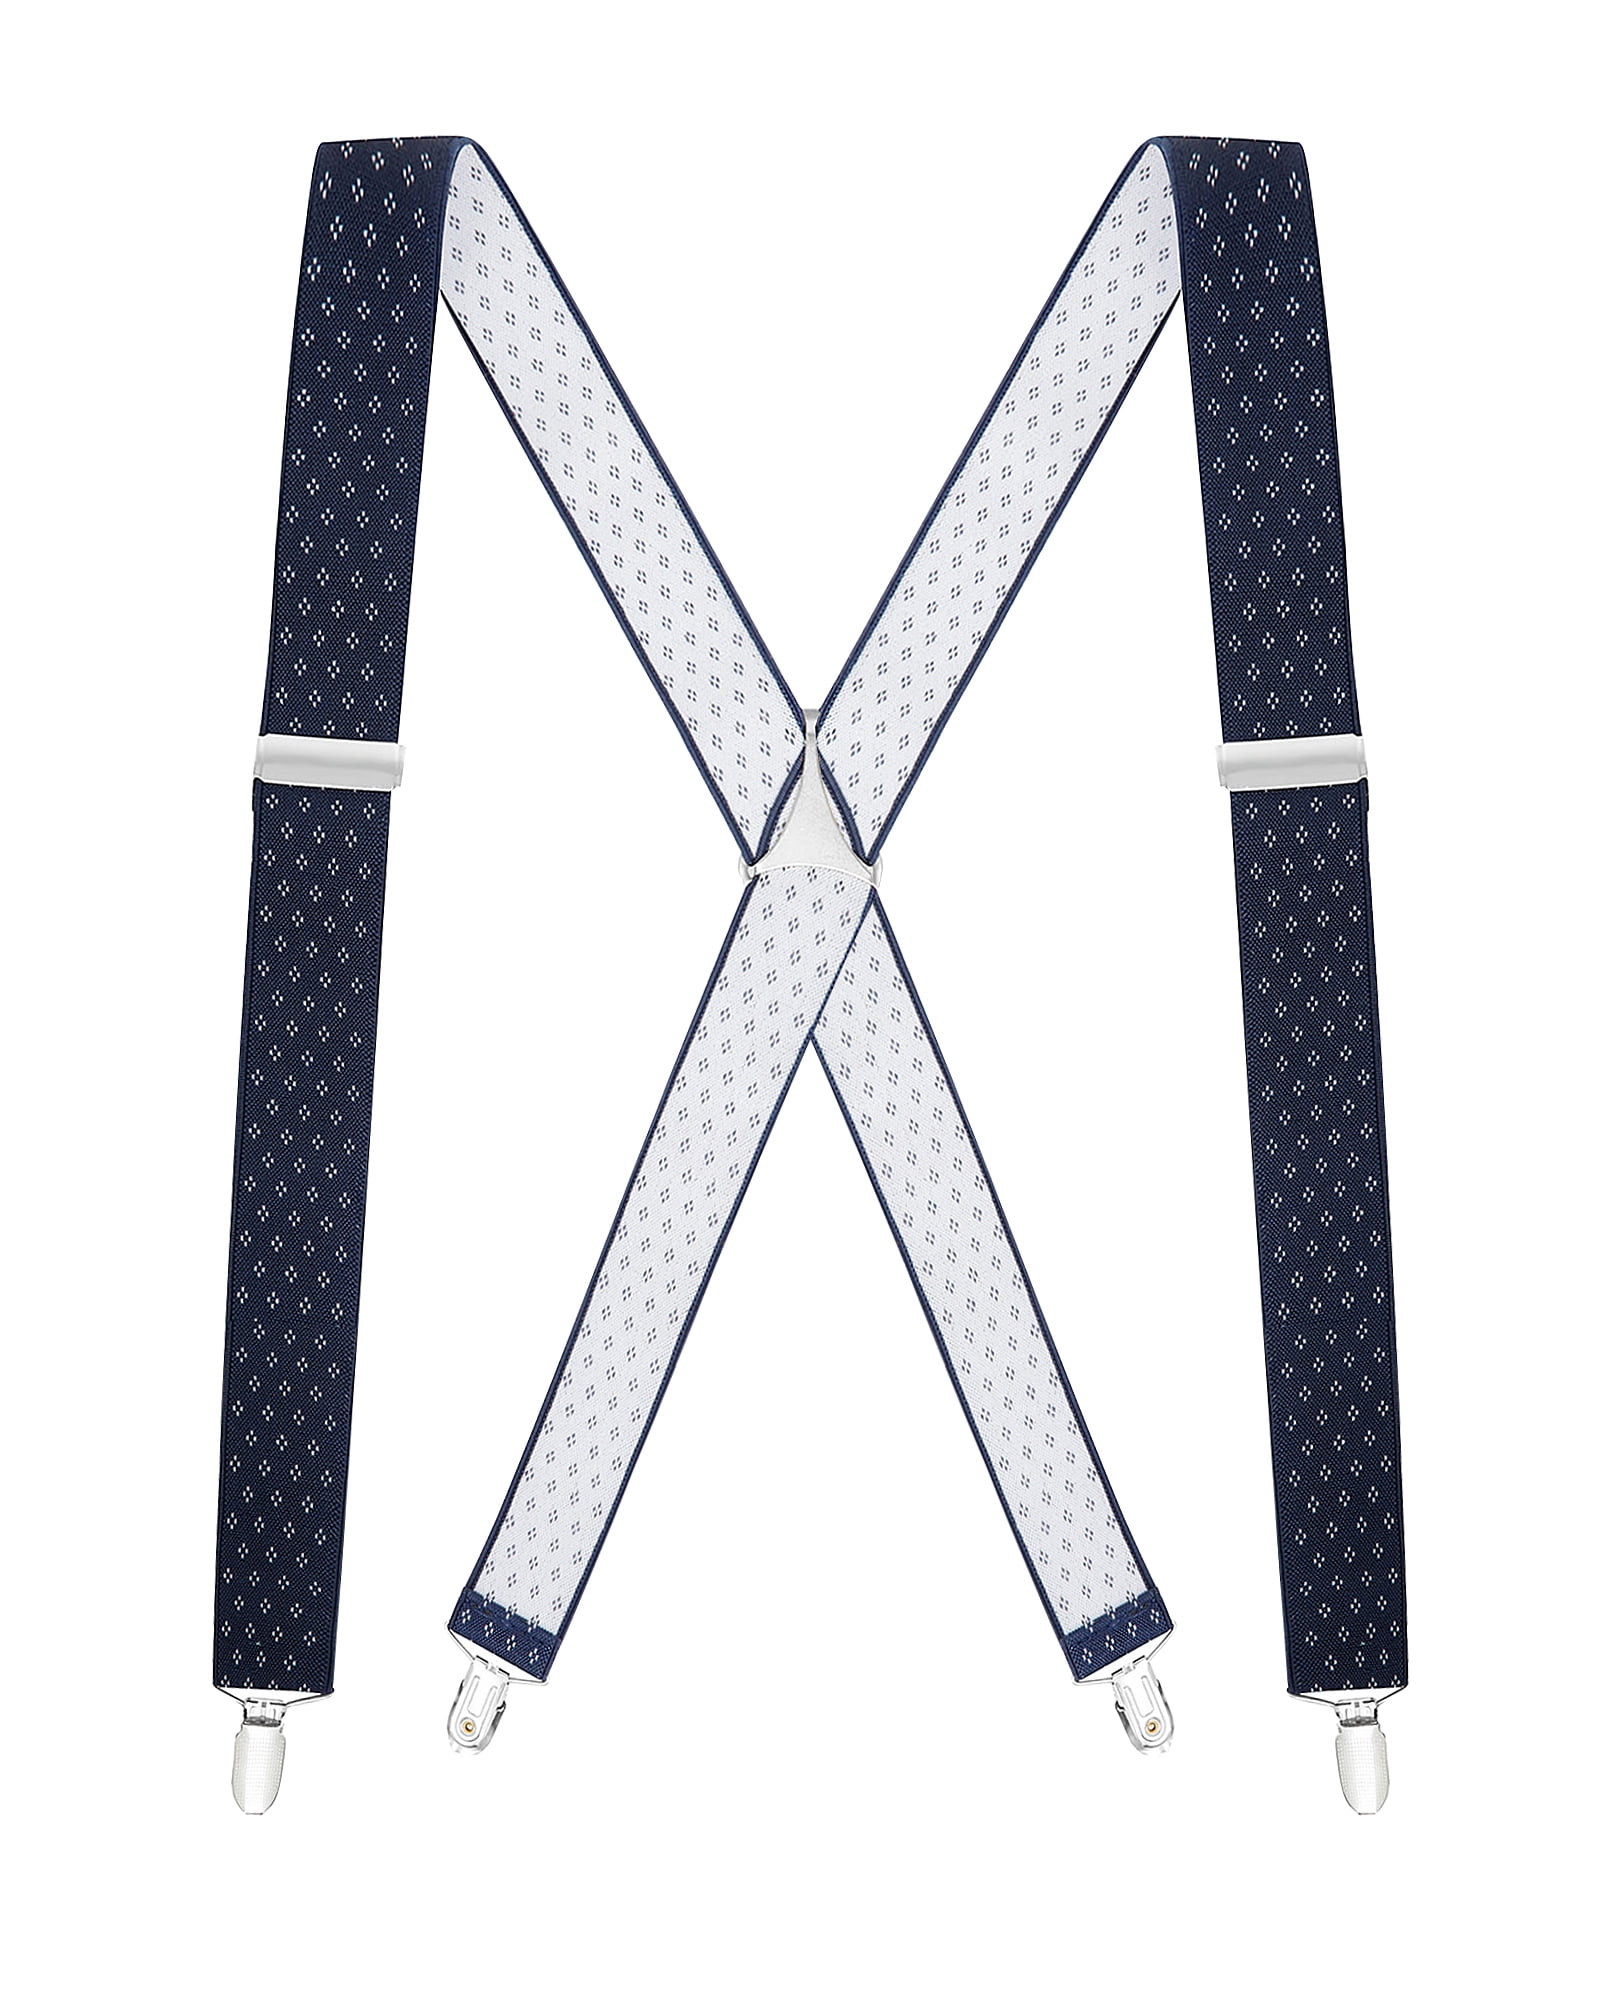 Buyless Fashion Suspenders for Men Y Shape 48 Elastic Adjustable Straps 1 1/4 